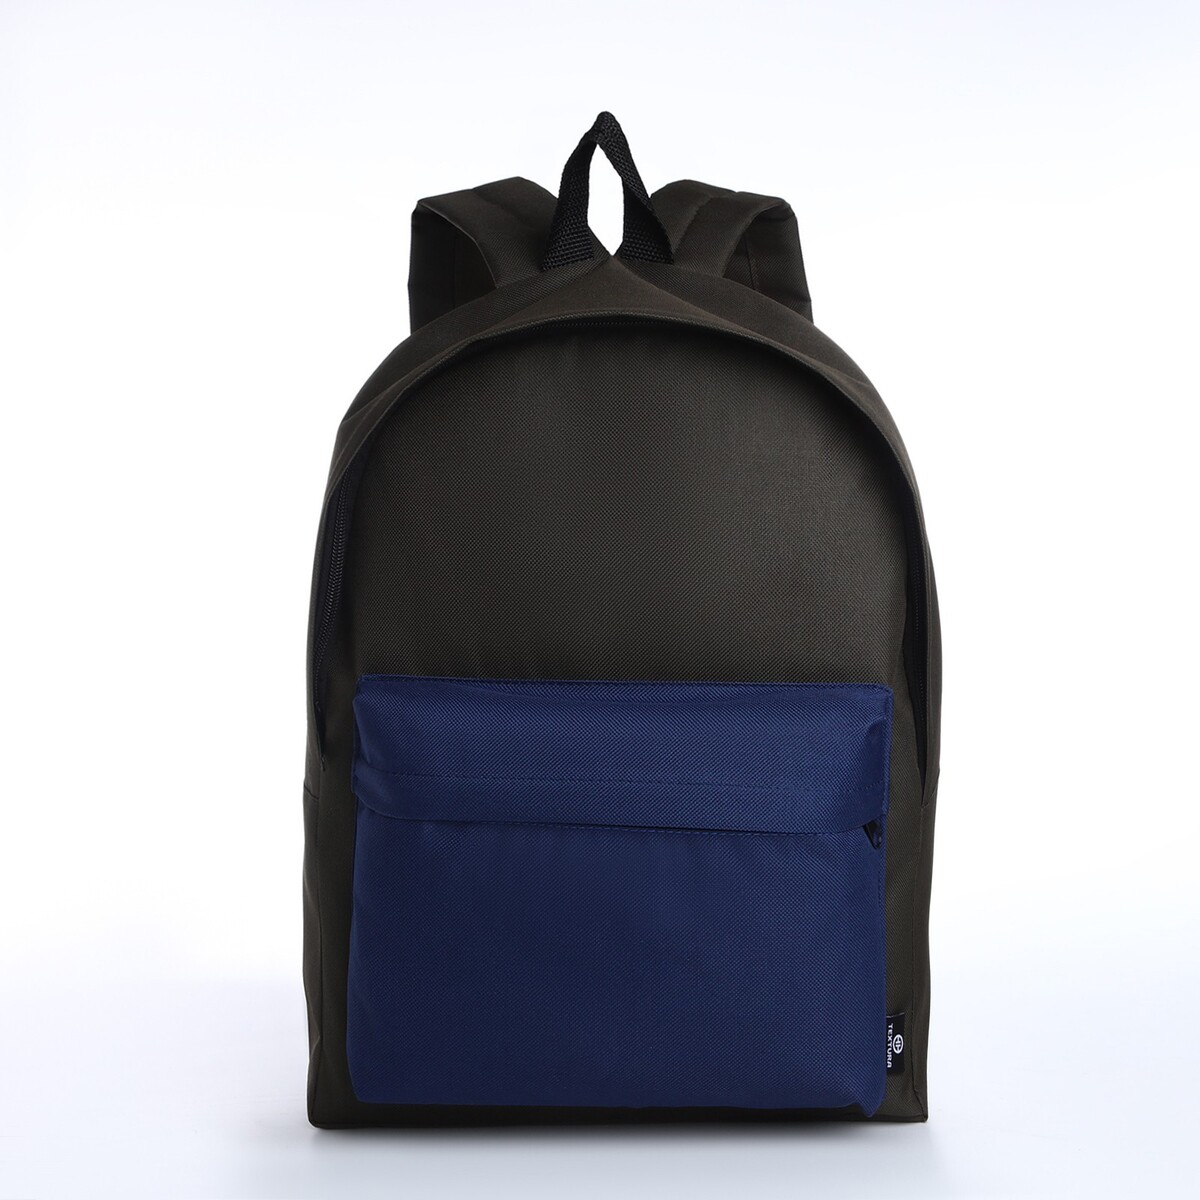 Спортивный рюкзак из текстиля на молнии textura, 20 литров, цвет хаки/синий спортивный рюкзак textura 20 литров хаки